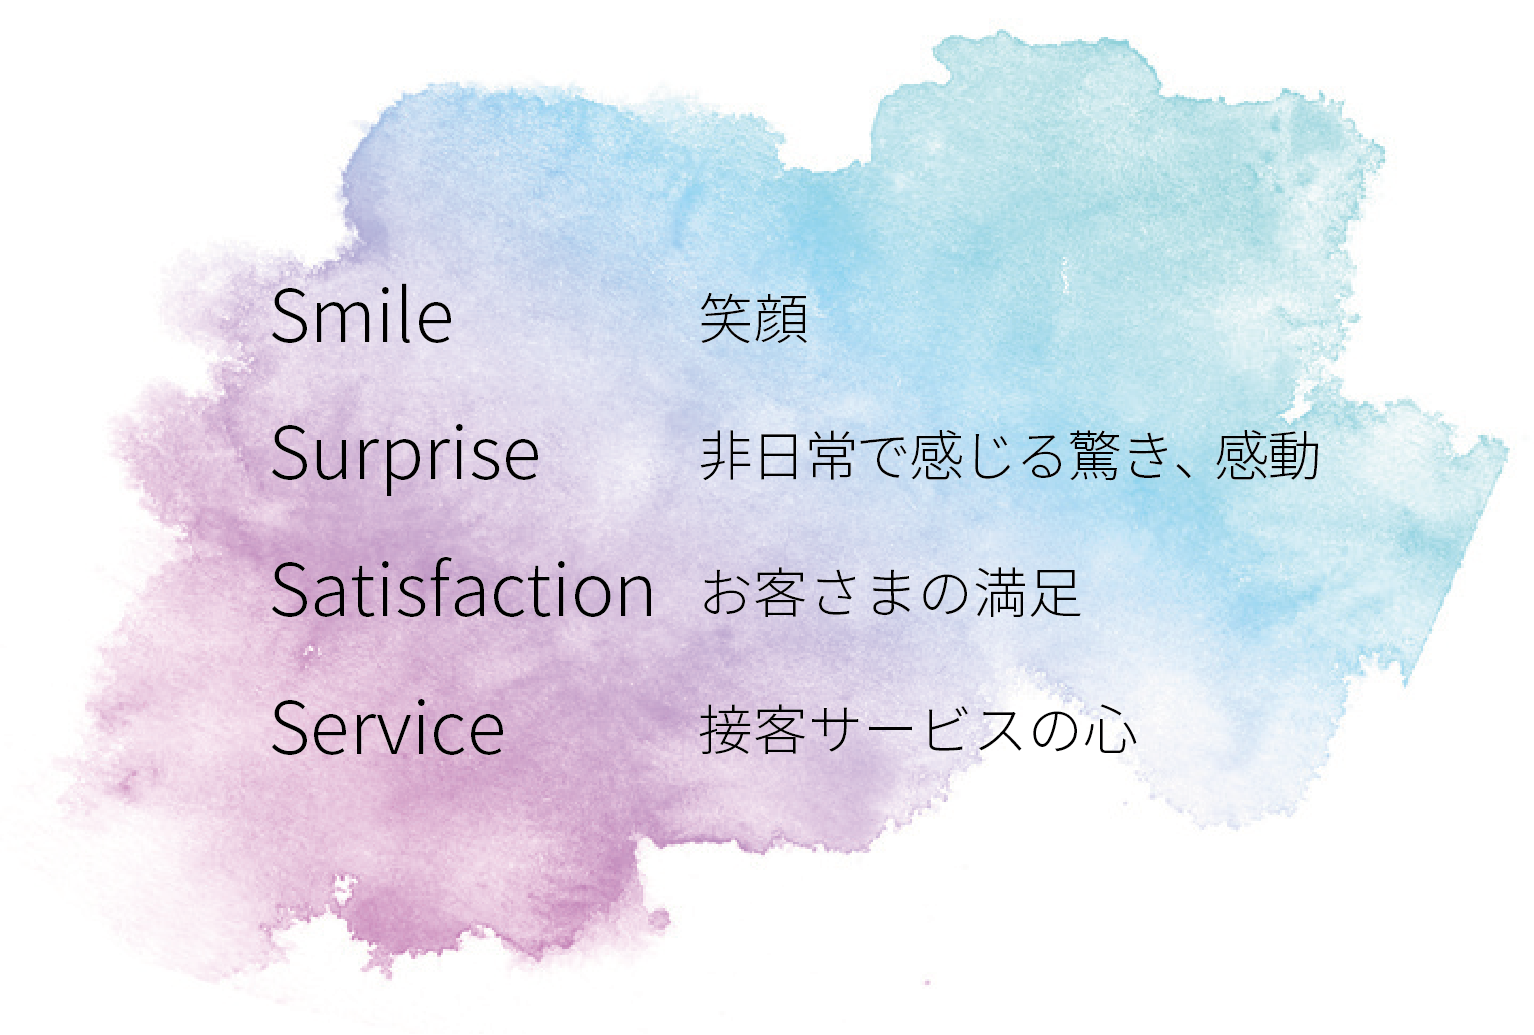 Smile, Surprise, Satisfaction, service, 笑顔, 非日常で感じる驚き, 感動, お客さまの満足, 接客サービスの心